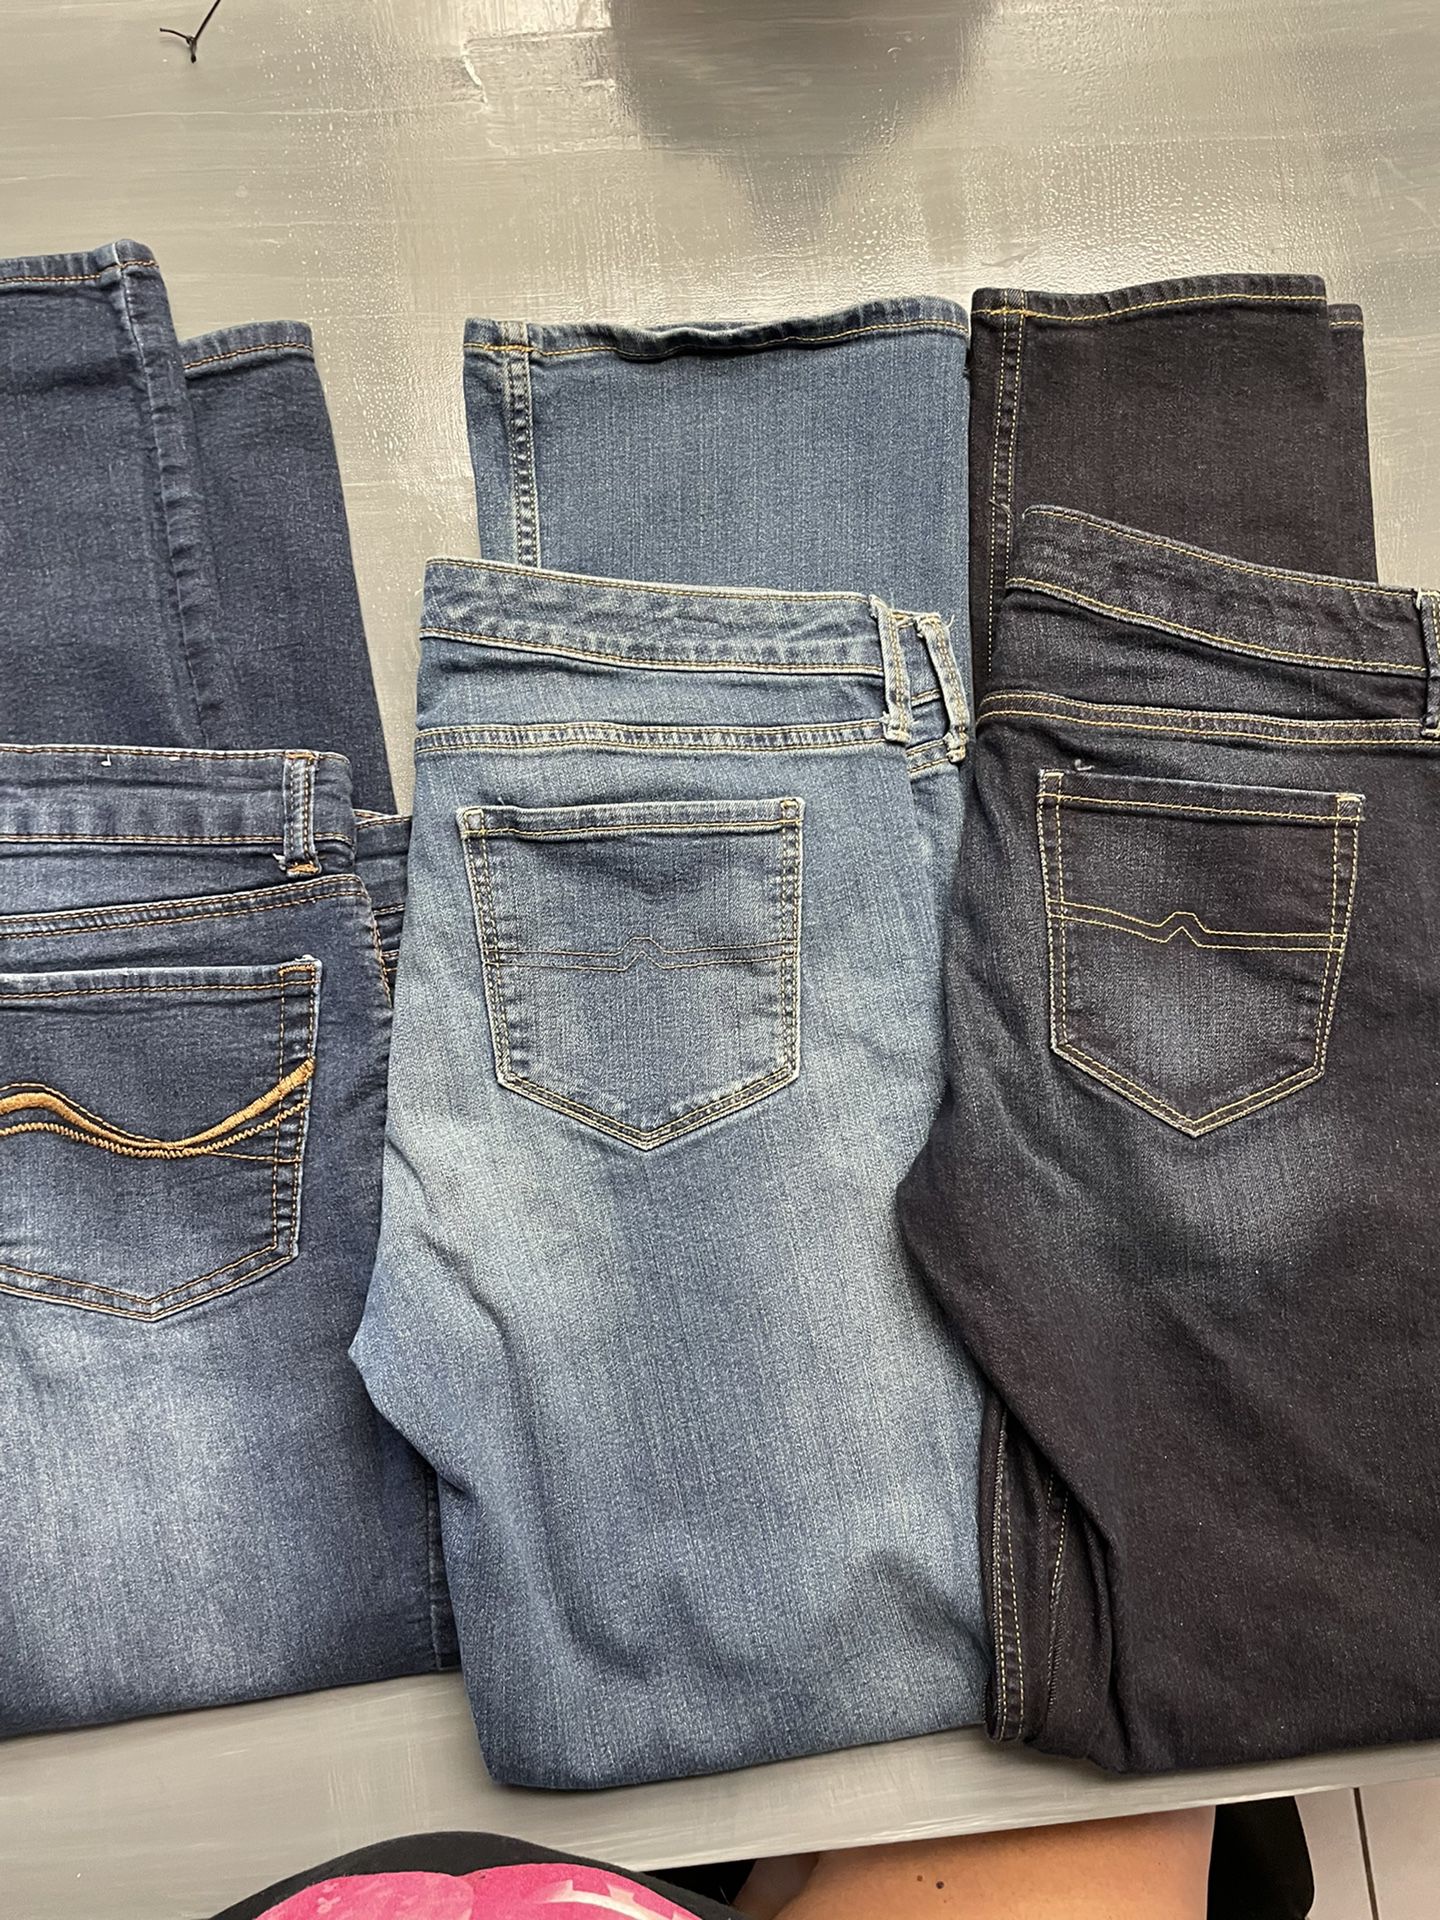 Lot Of 3 Size 11 Women’s Jeans